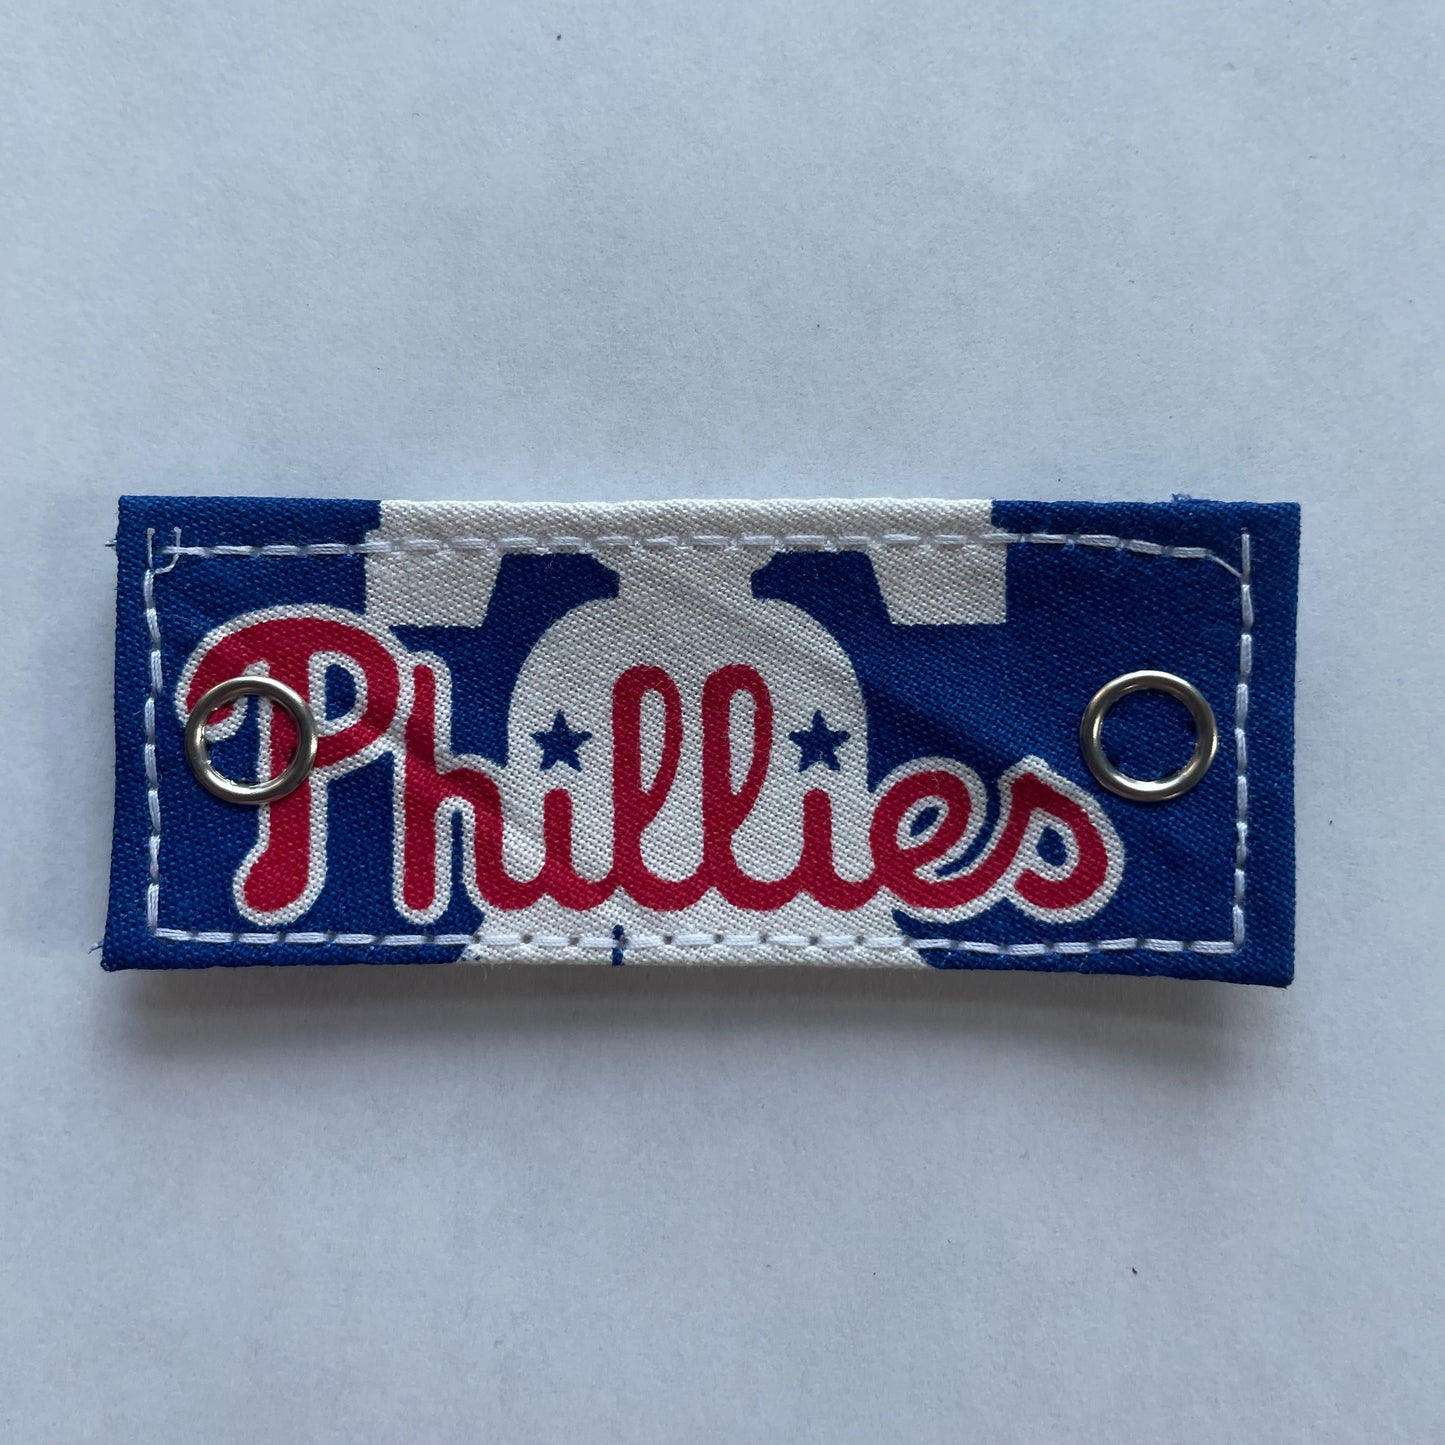 Team Patch | Phillies